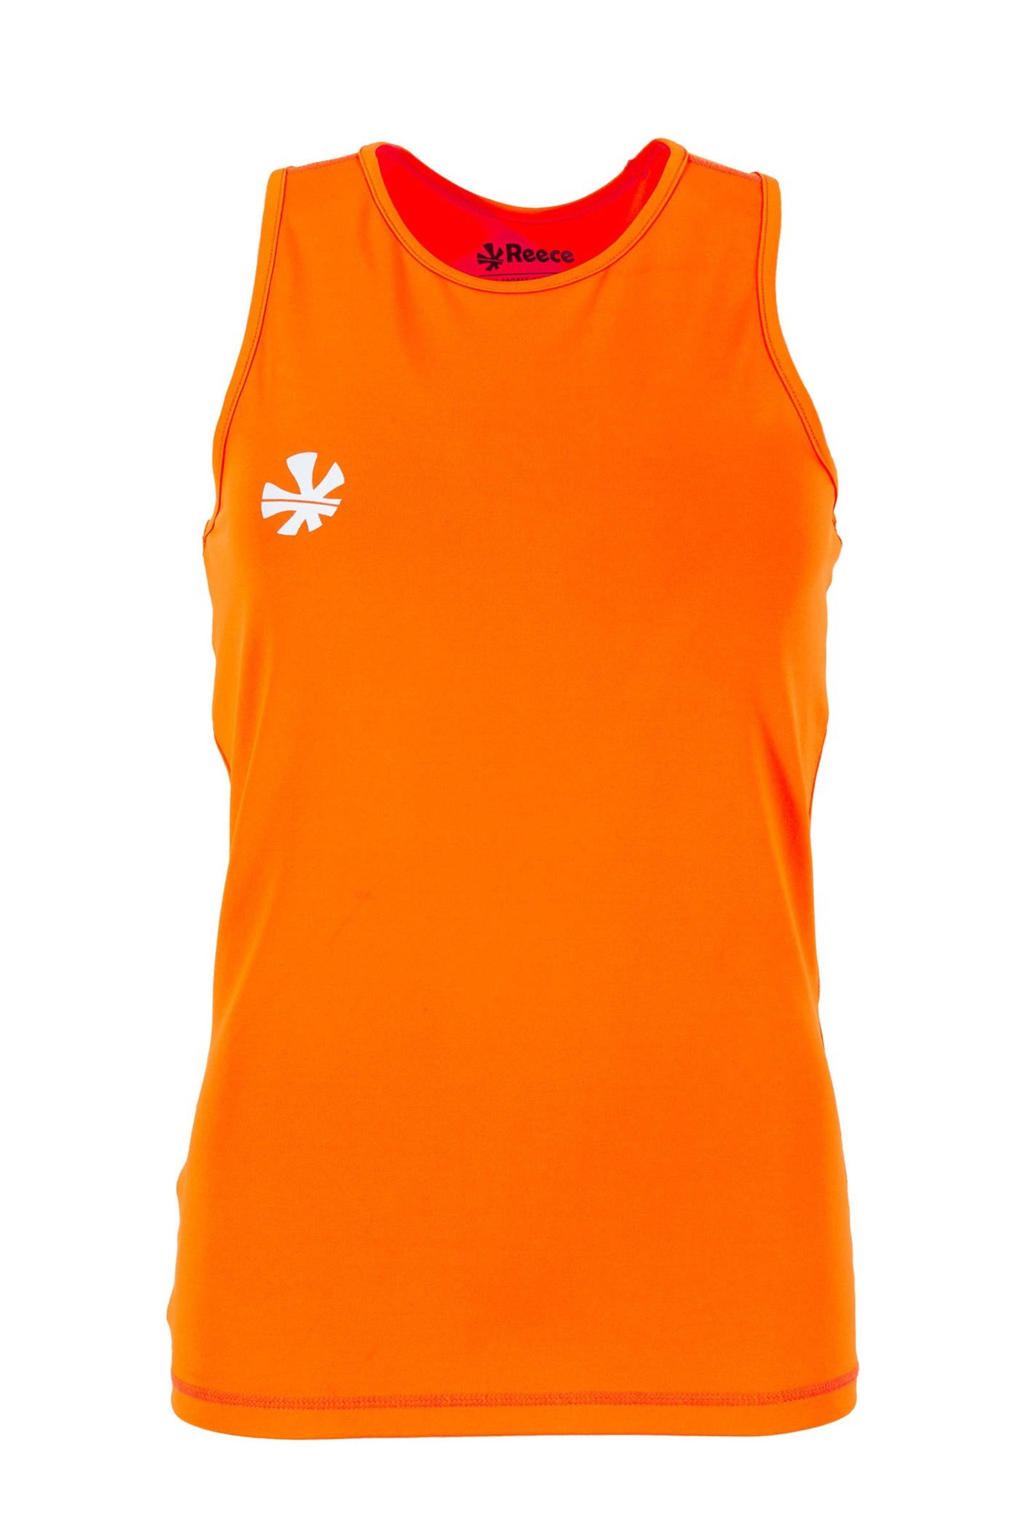 Oranje dames Reece Australia sporttop van polyester met logo dessin en ronde hals